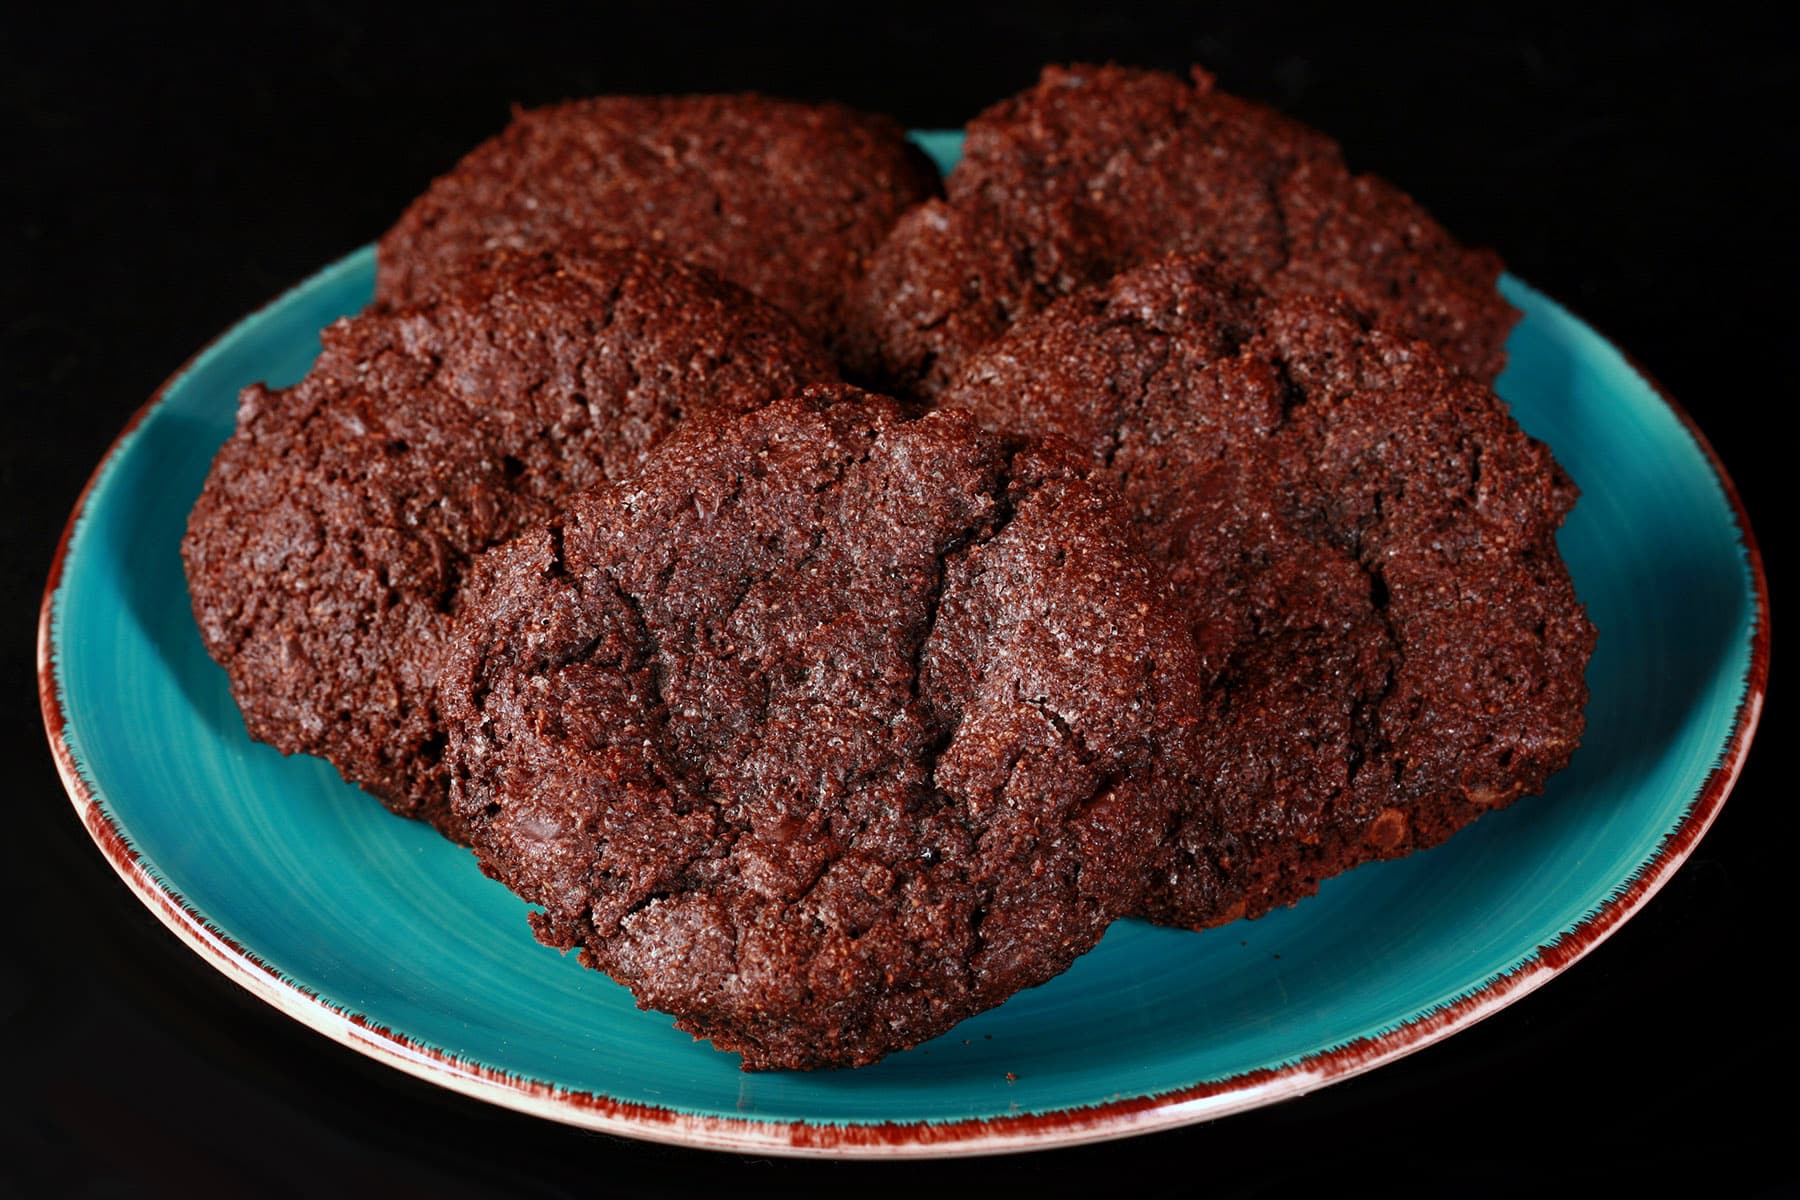 A plate of keto chocolate cookies.